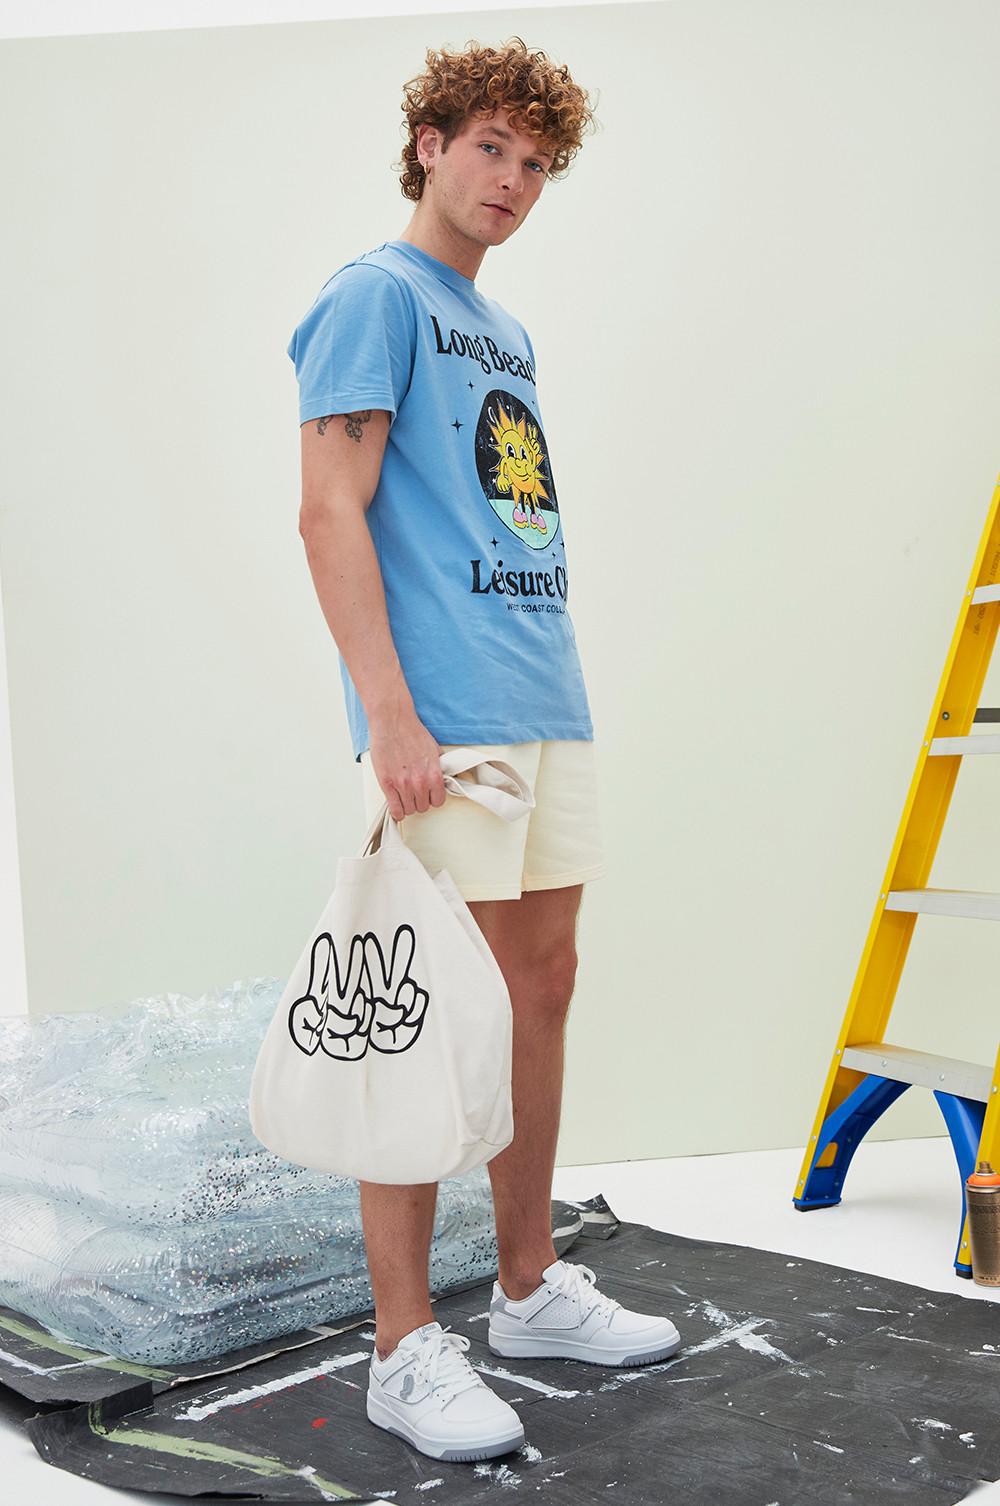 T-shirt com slogan "Longbeach Leisure Club" azul-marinho 8 €